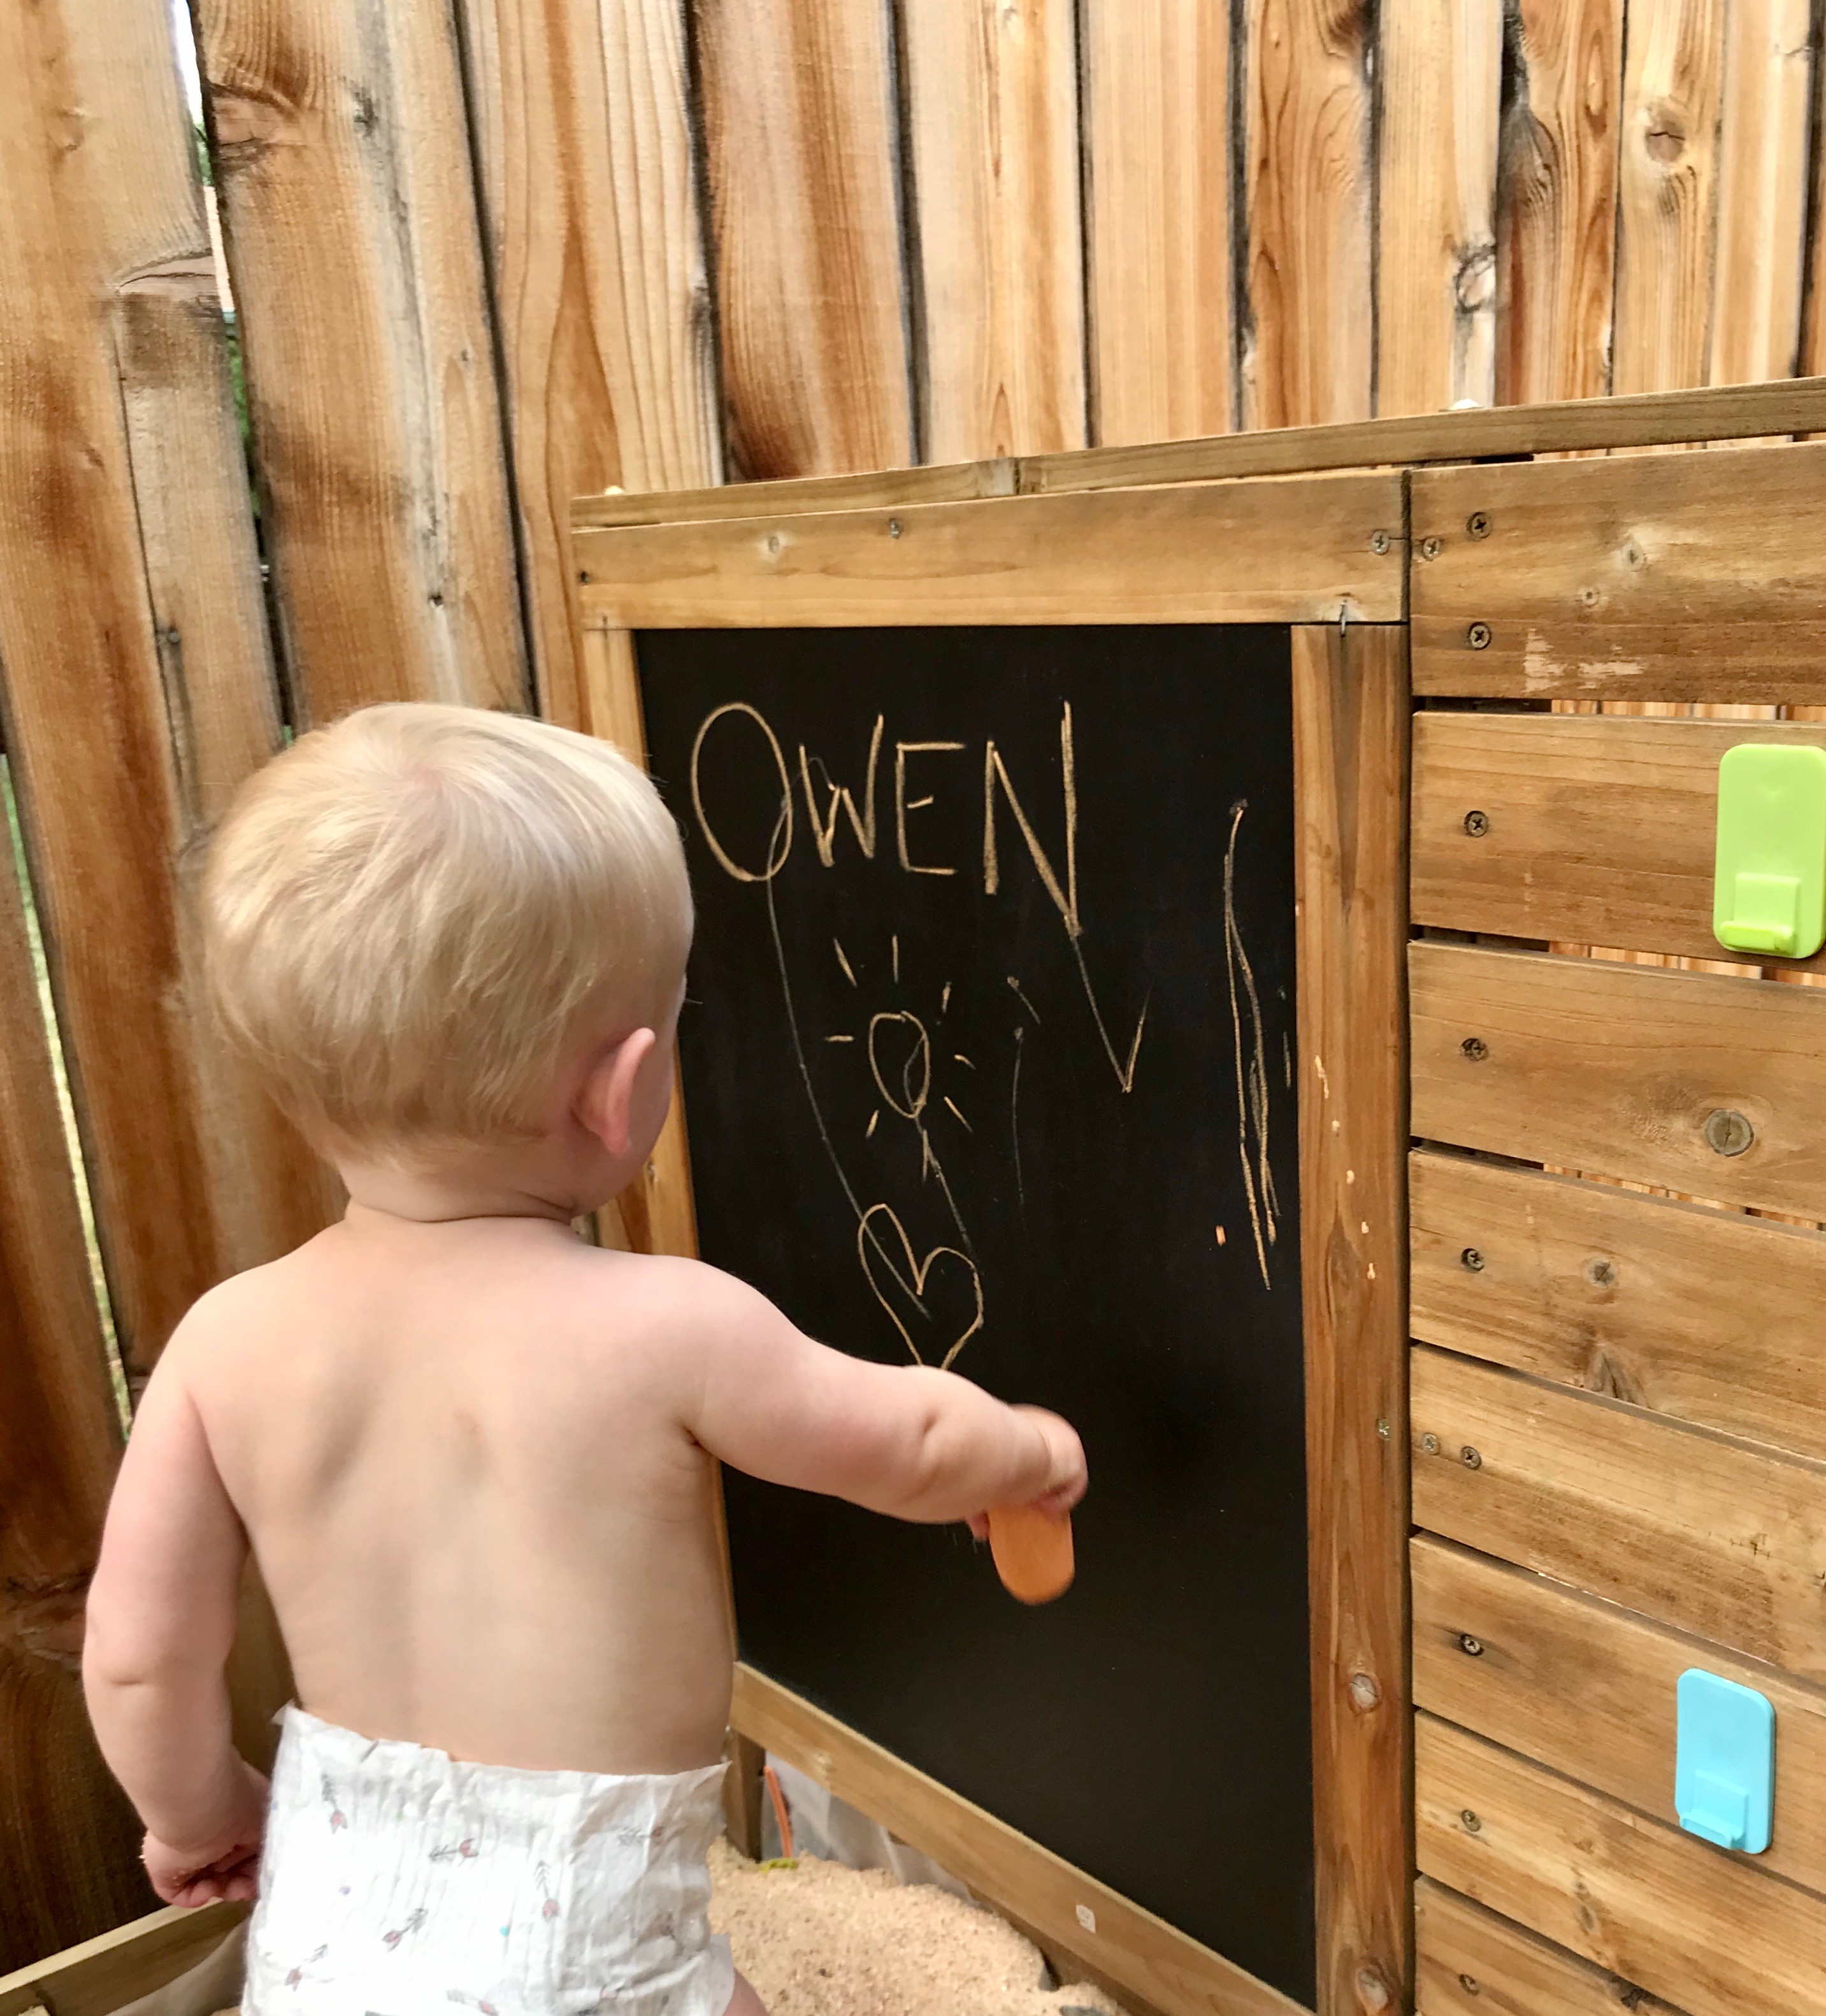 Owen writing with chalk in his sandbox.